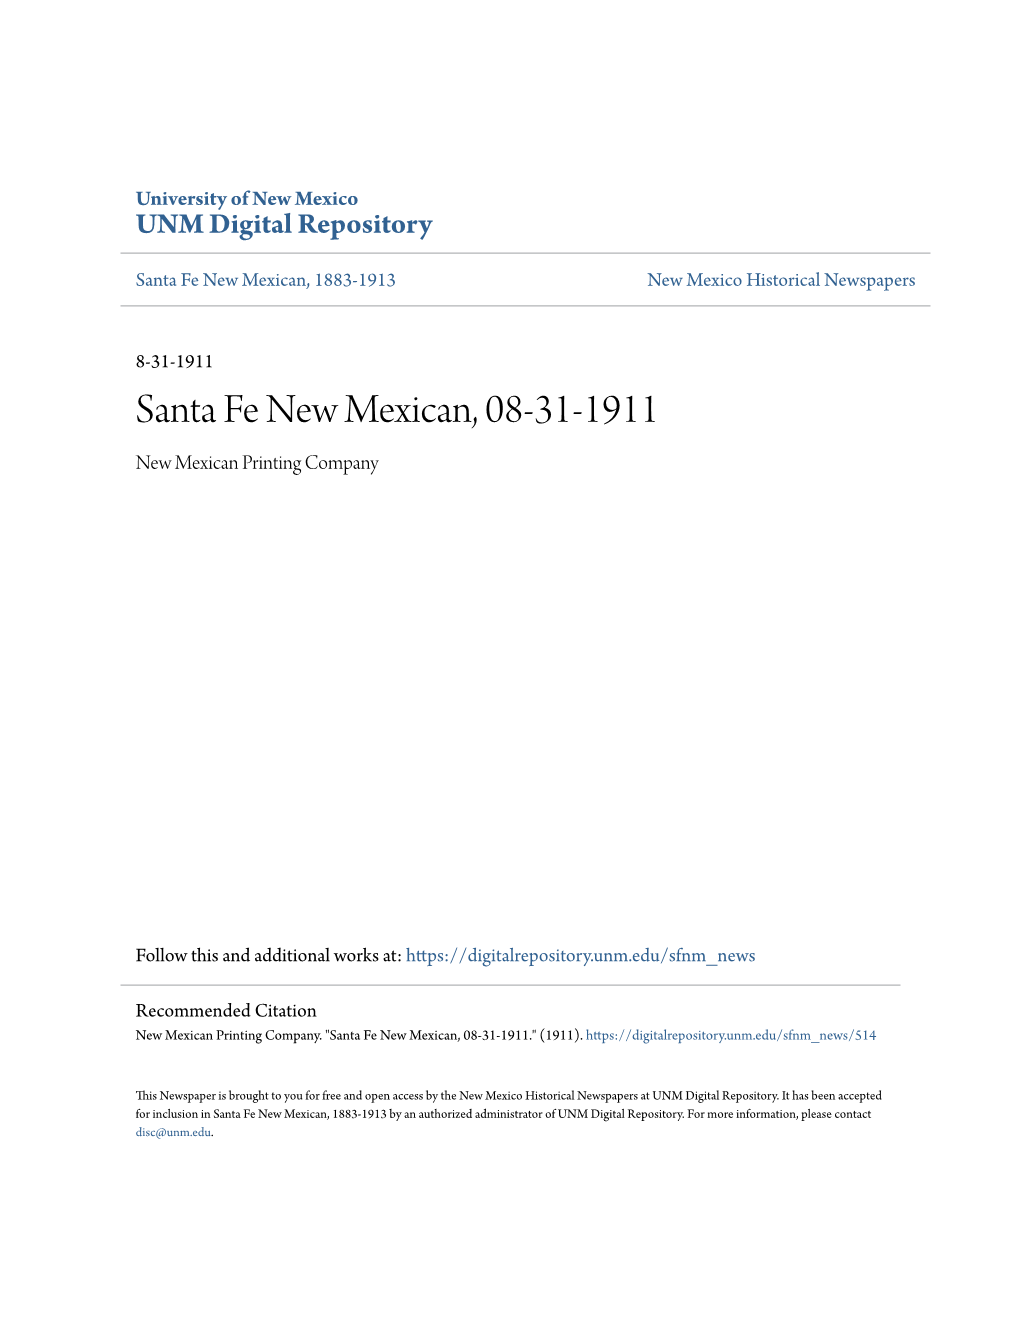 Santa Fe New Mexican, 08-31-1911 New Mexican Printing Company